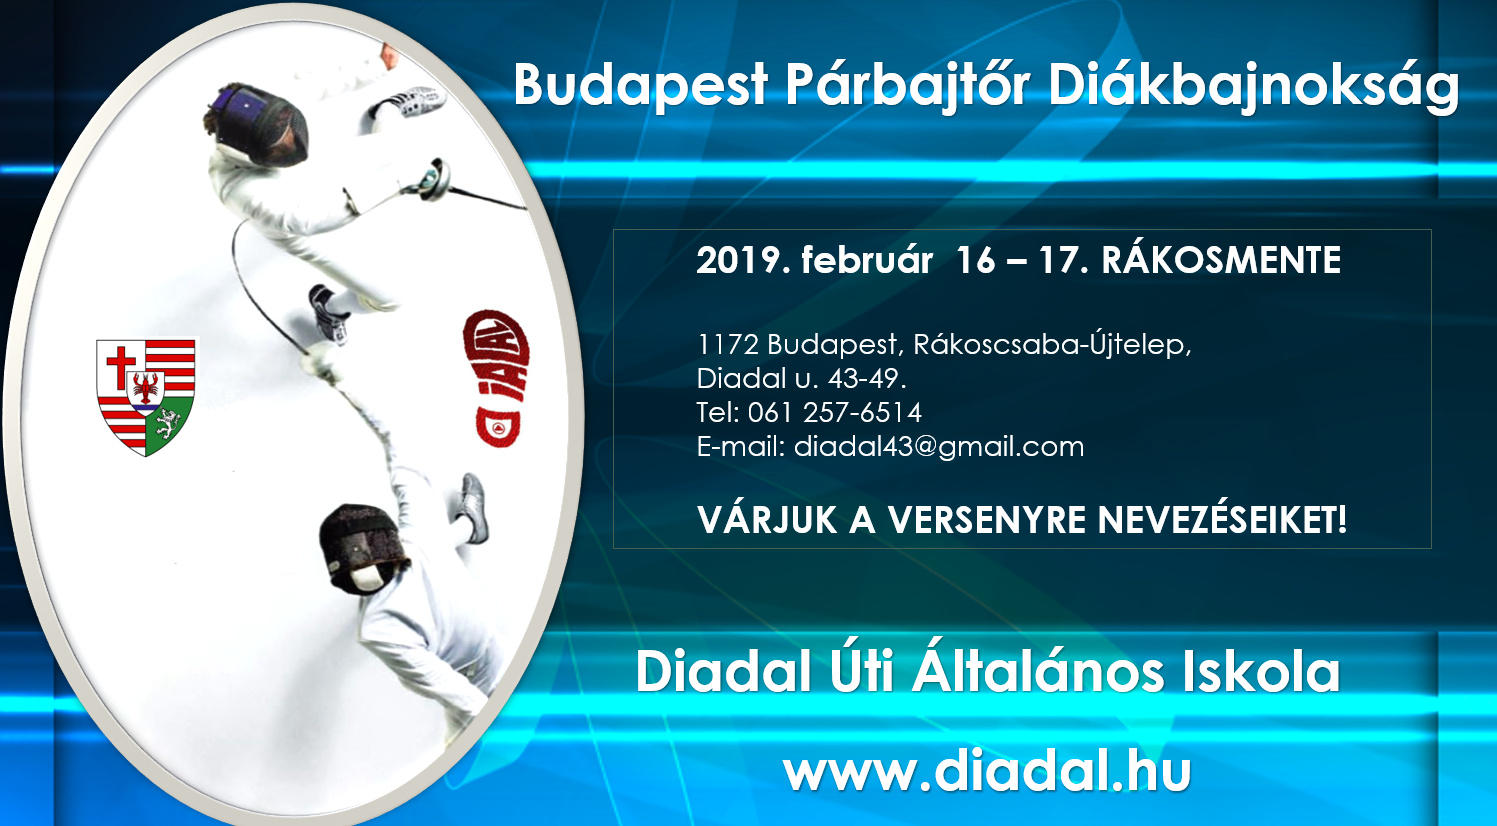 Budapest Párbajtőr Diákbajnokság 2019.png